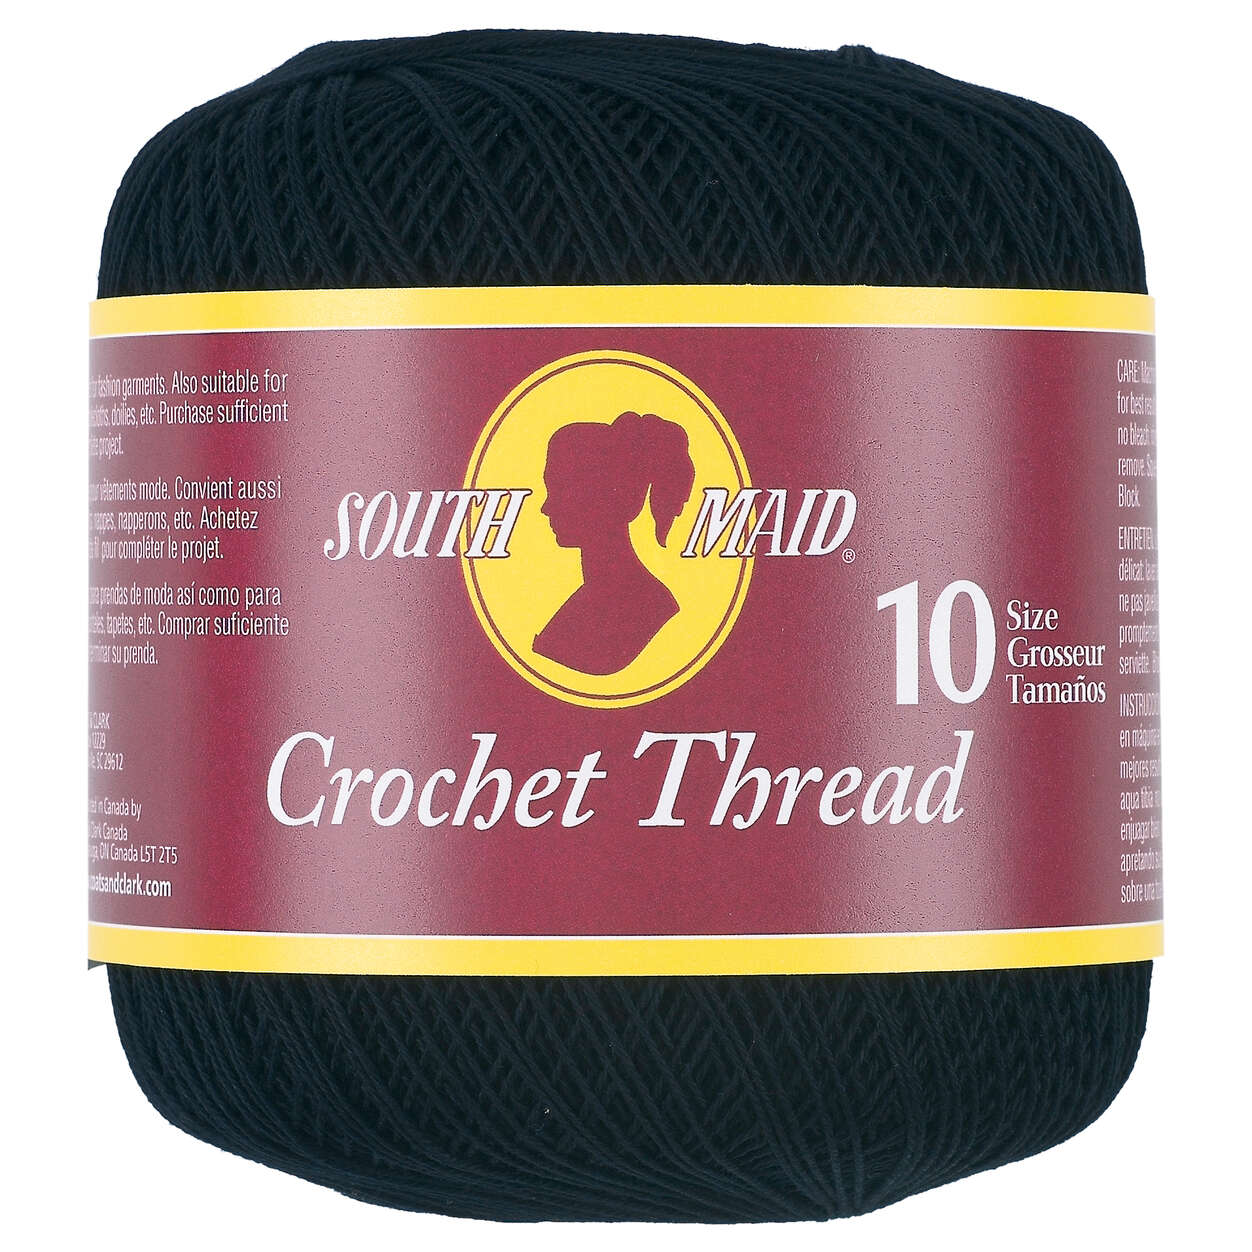 South Maid Crochet Thread, Size 10